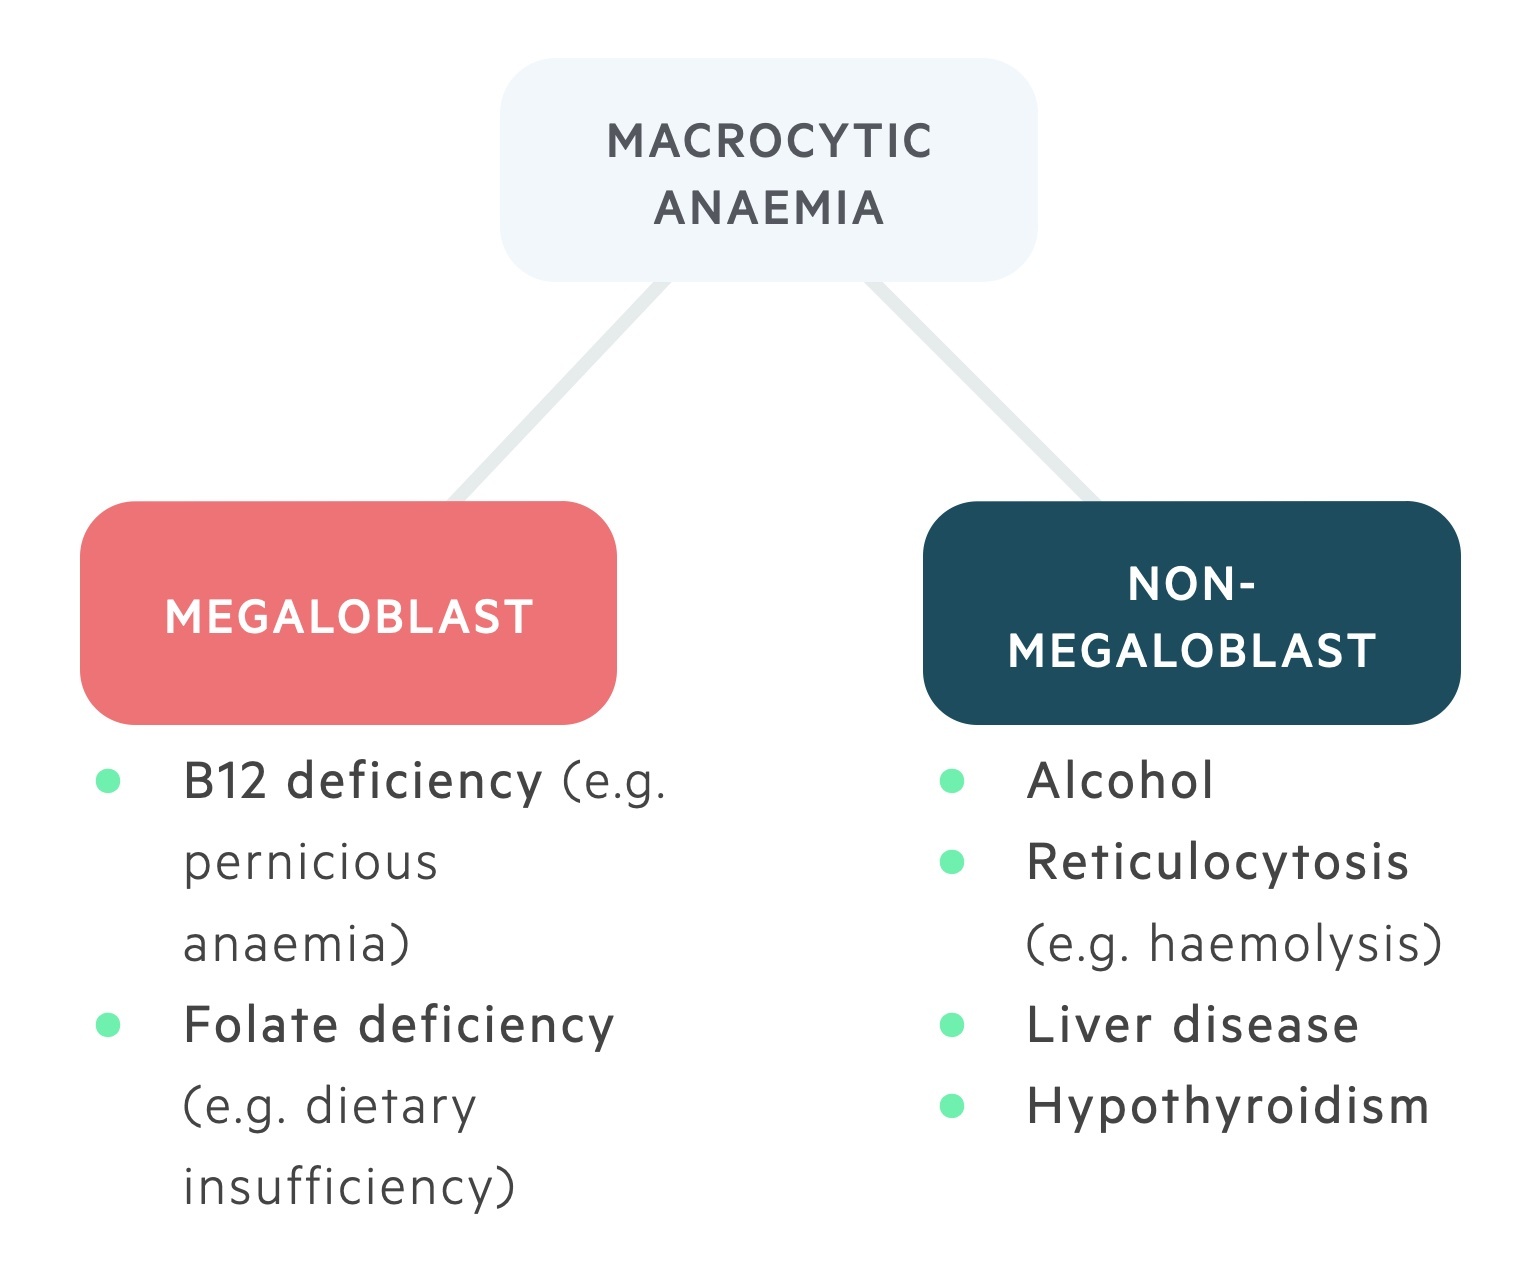 Classification of macrocytic anaemia